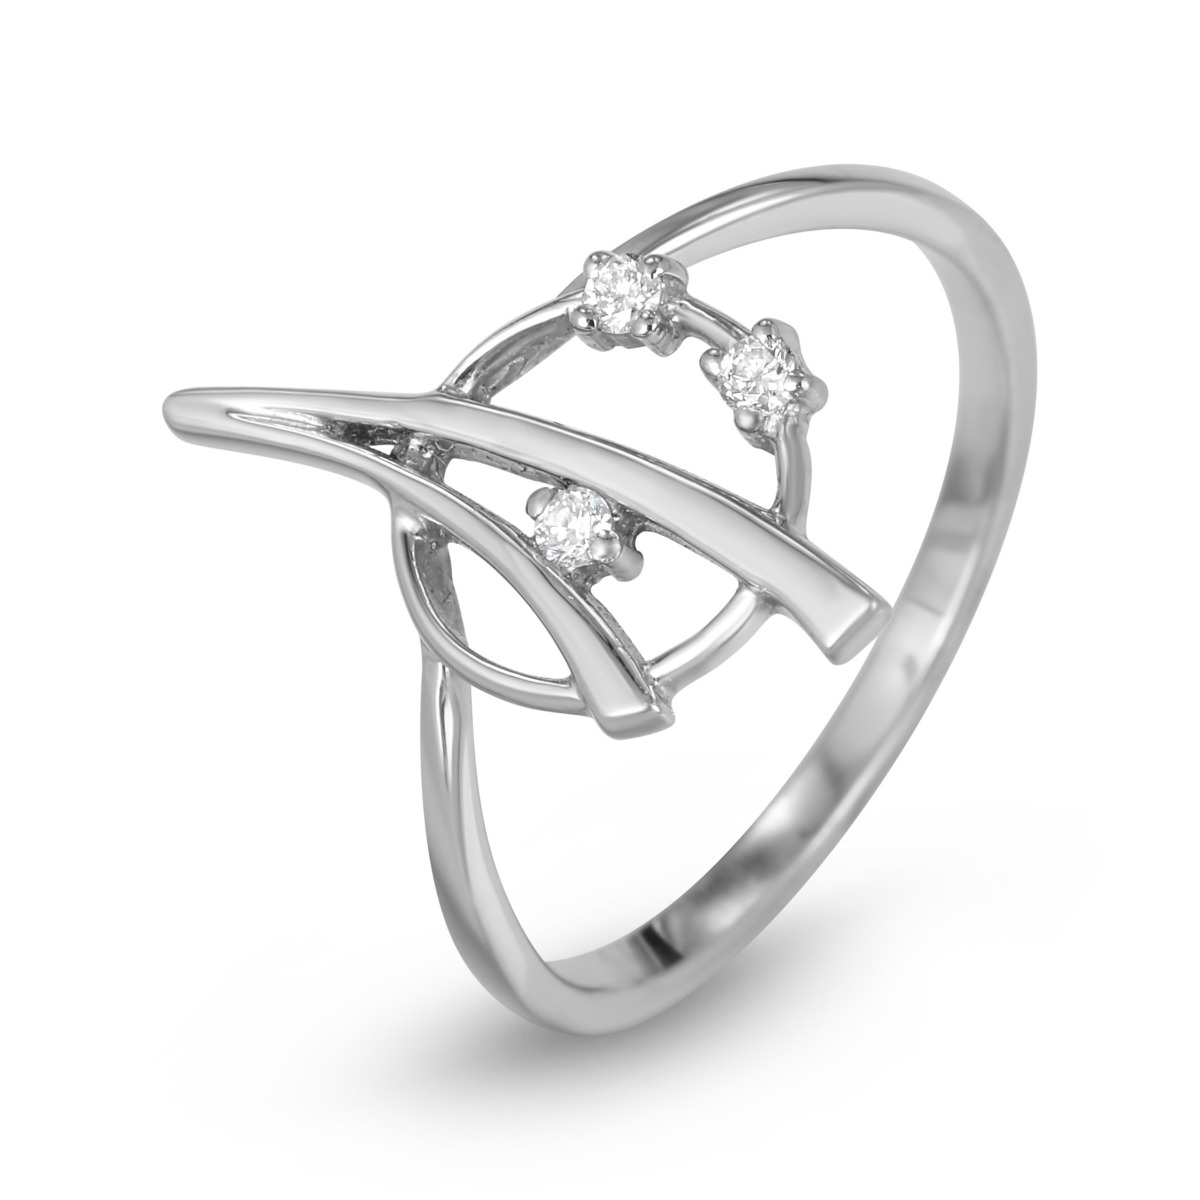 Anbinder 14K White Gold ‘Cosmic Wonder’ Saturn Ring with Diamonds - 1